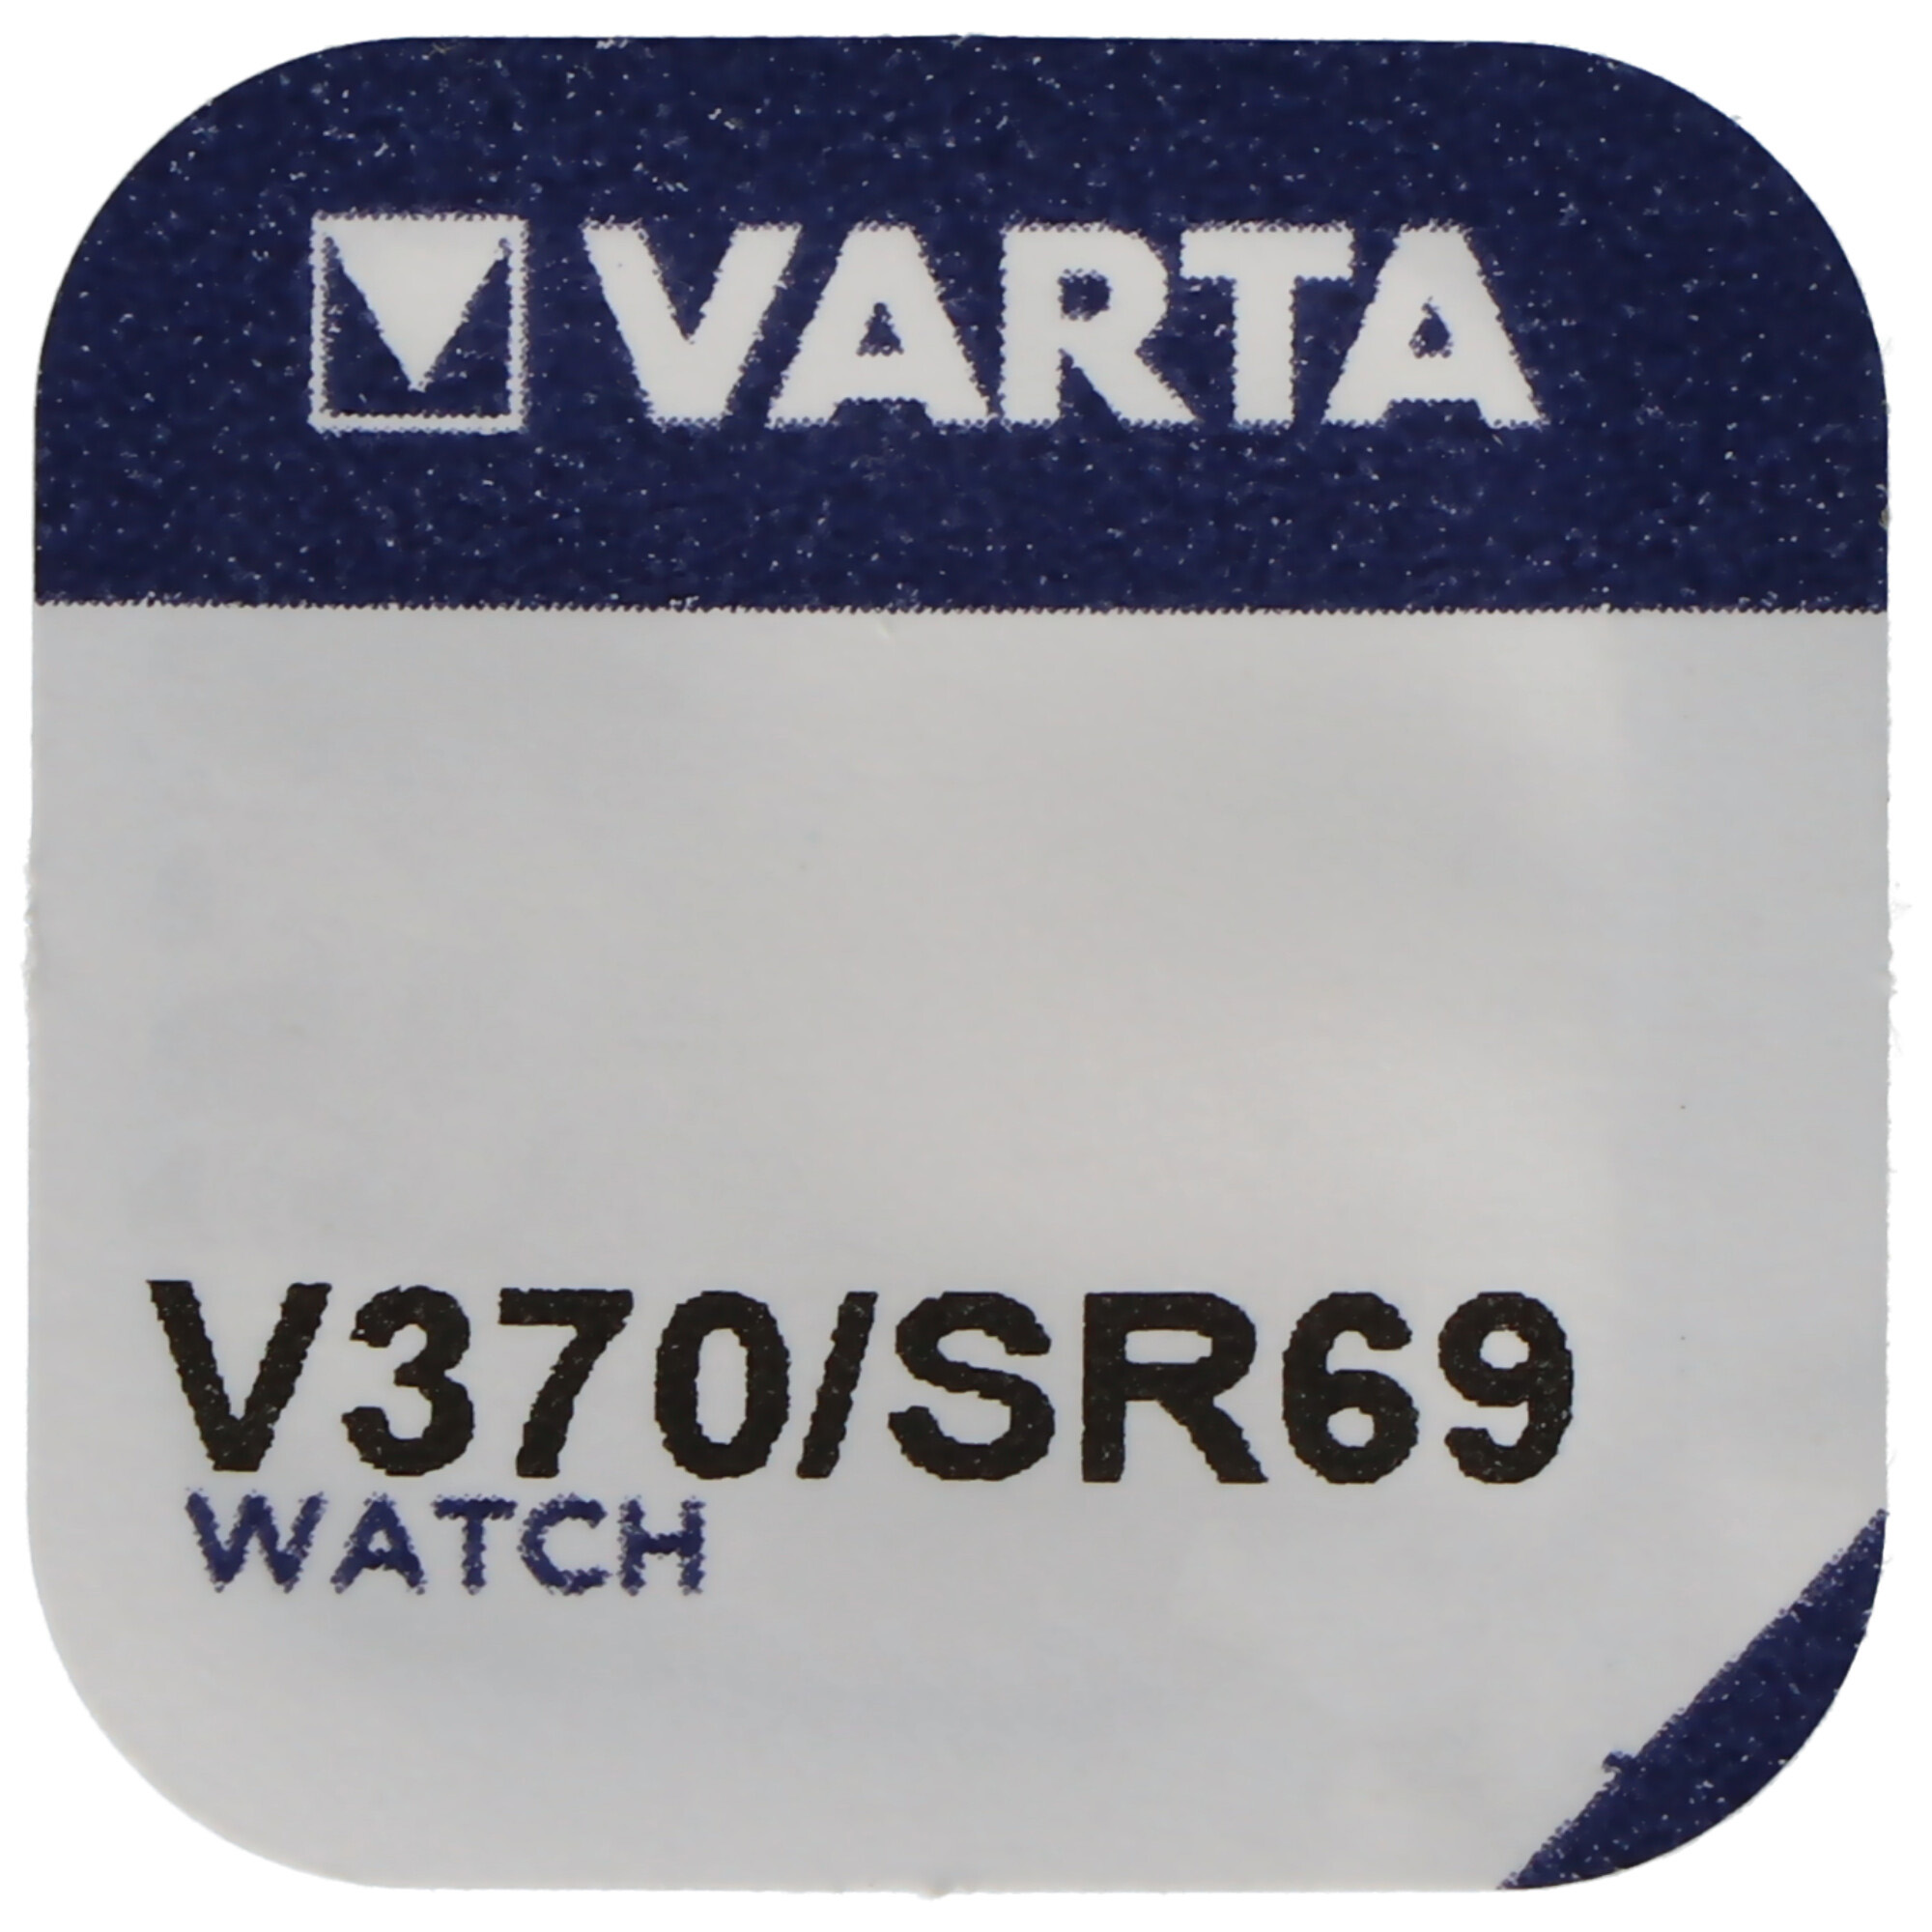 370, Varta V370, SR69, SR920W Knopfzelle für Uhren etc.